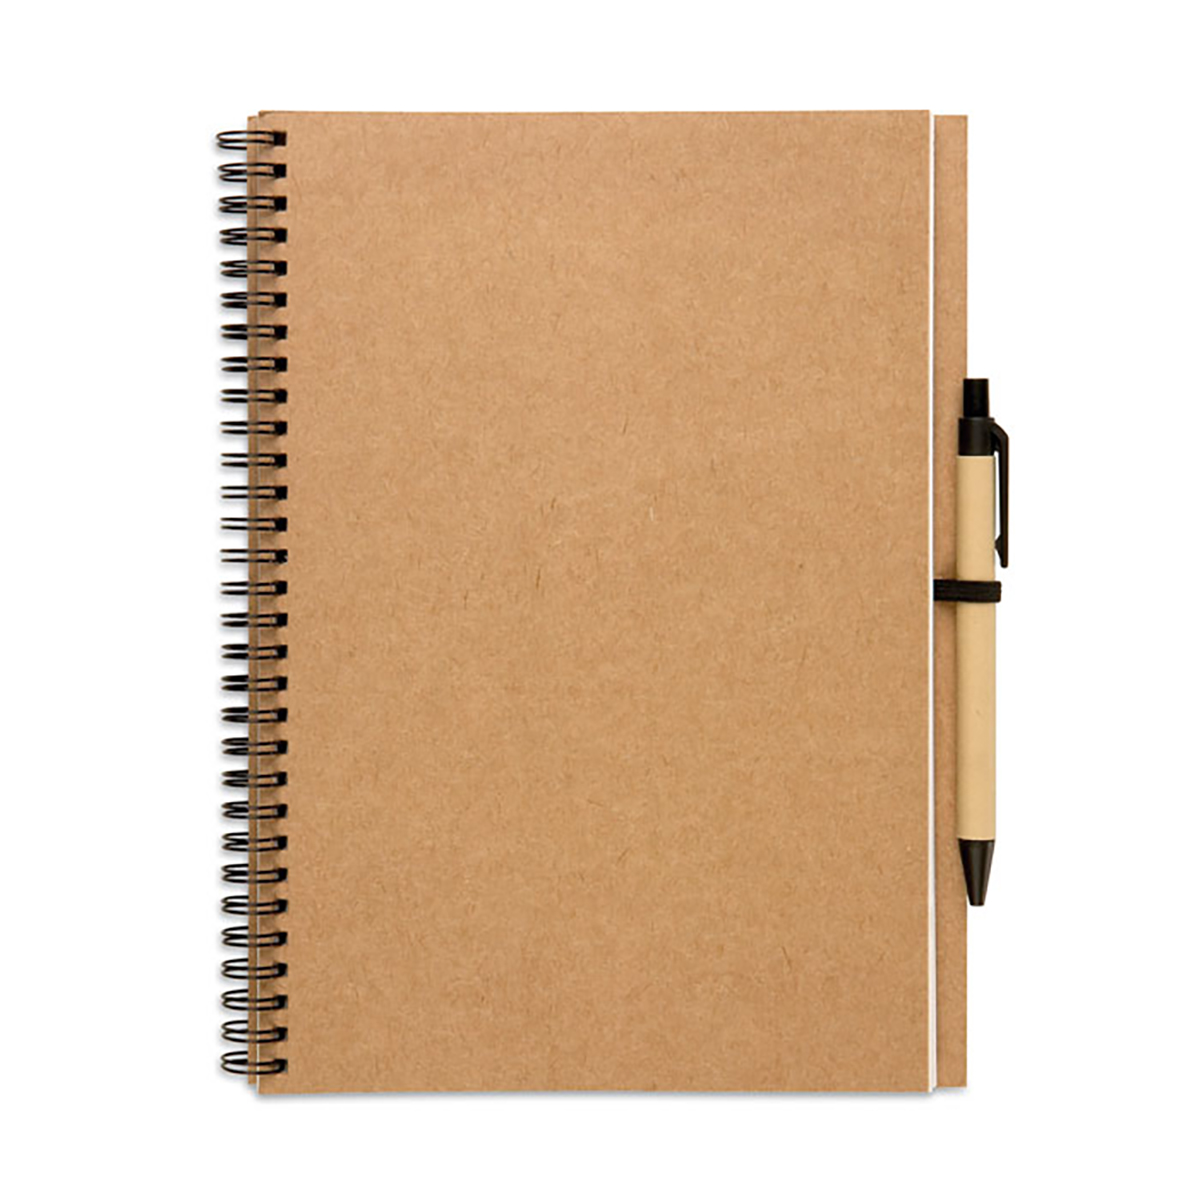 Notebook Spirale A5 (70 fogli neutri) BLOQUERO